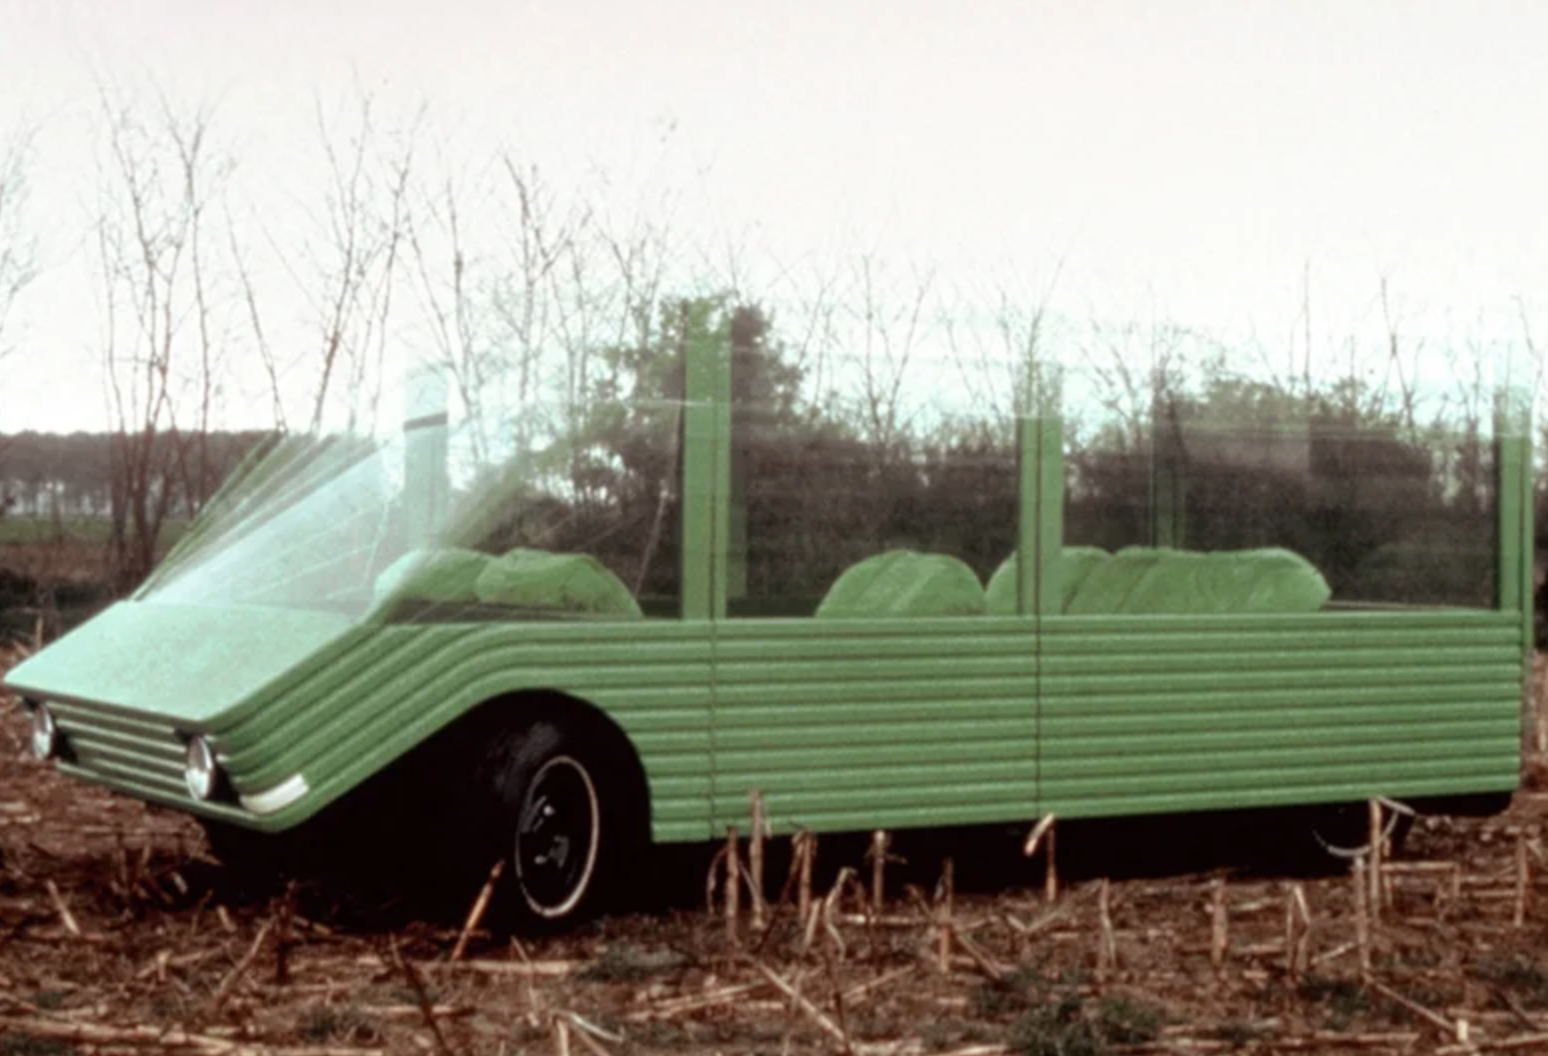  Bellini’s 1972 concept car, “Kar-a-Sutra” 